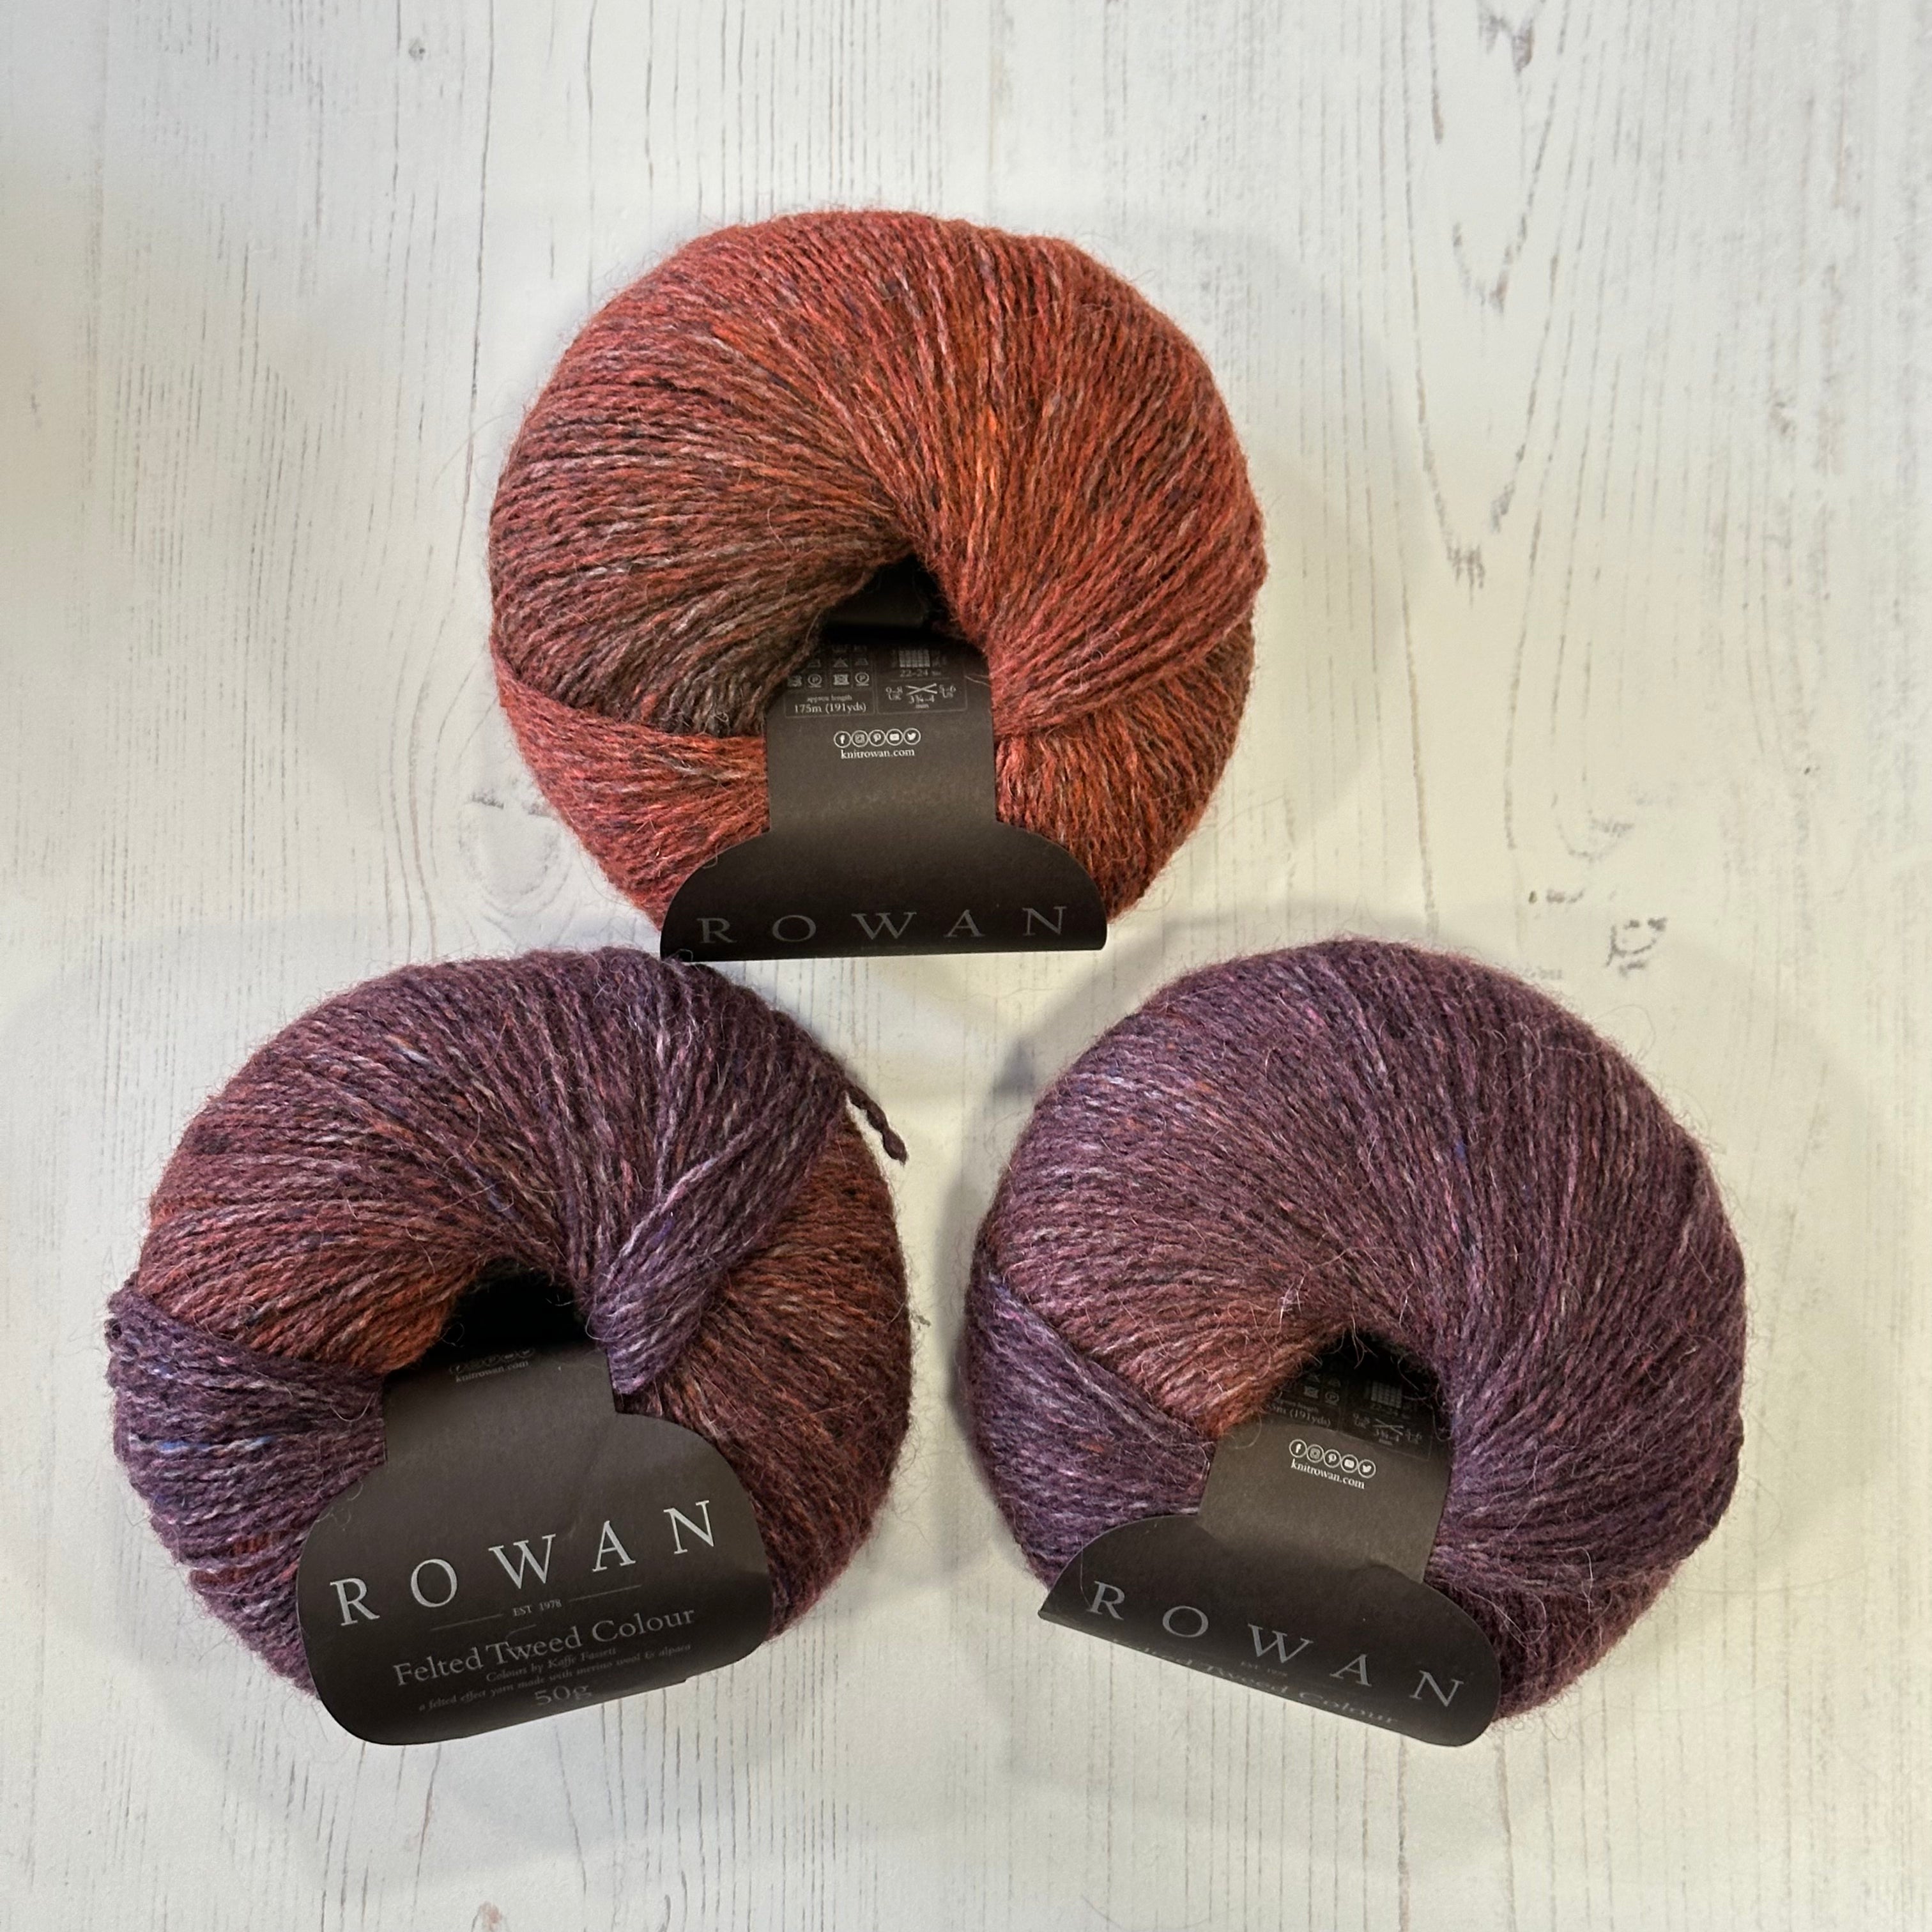 Rowan Felted Tweed Colour - Clearance Bundles & End of Dye Lot